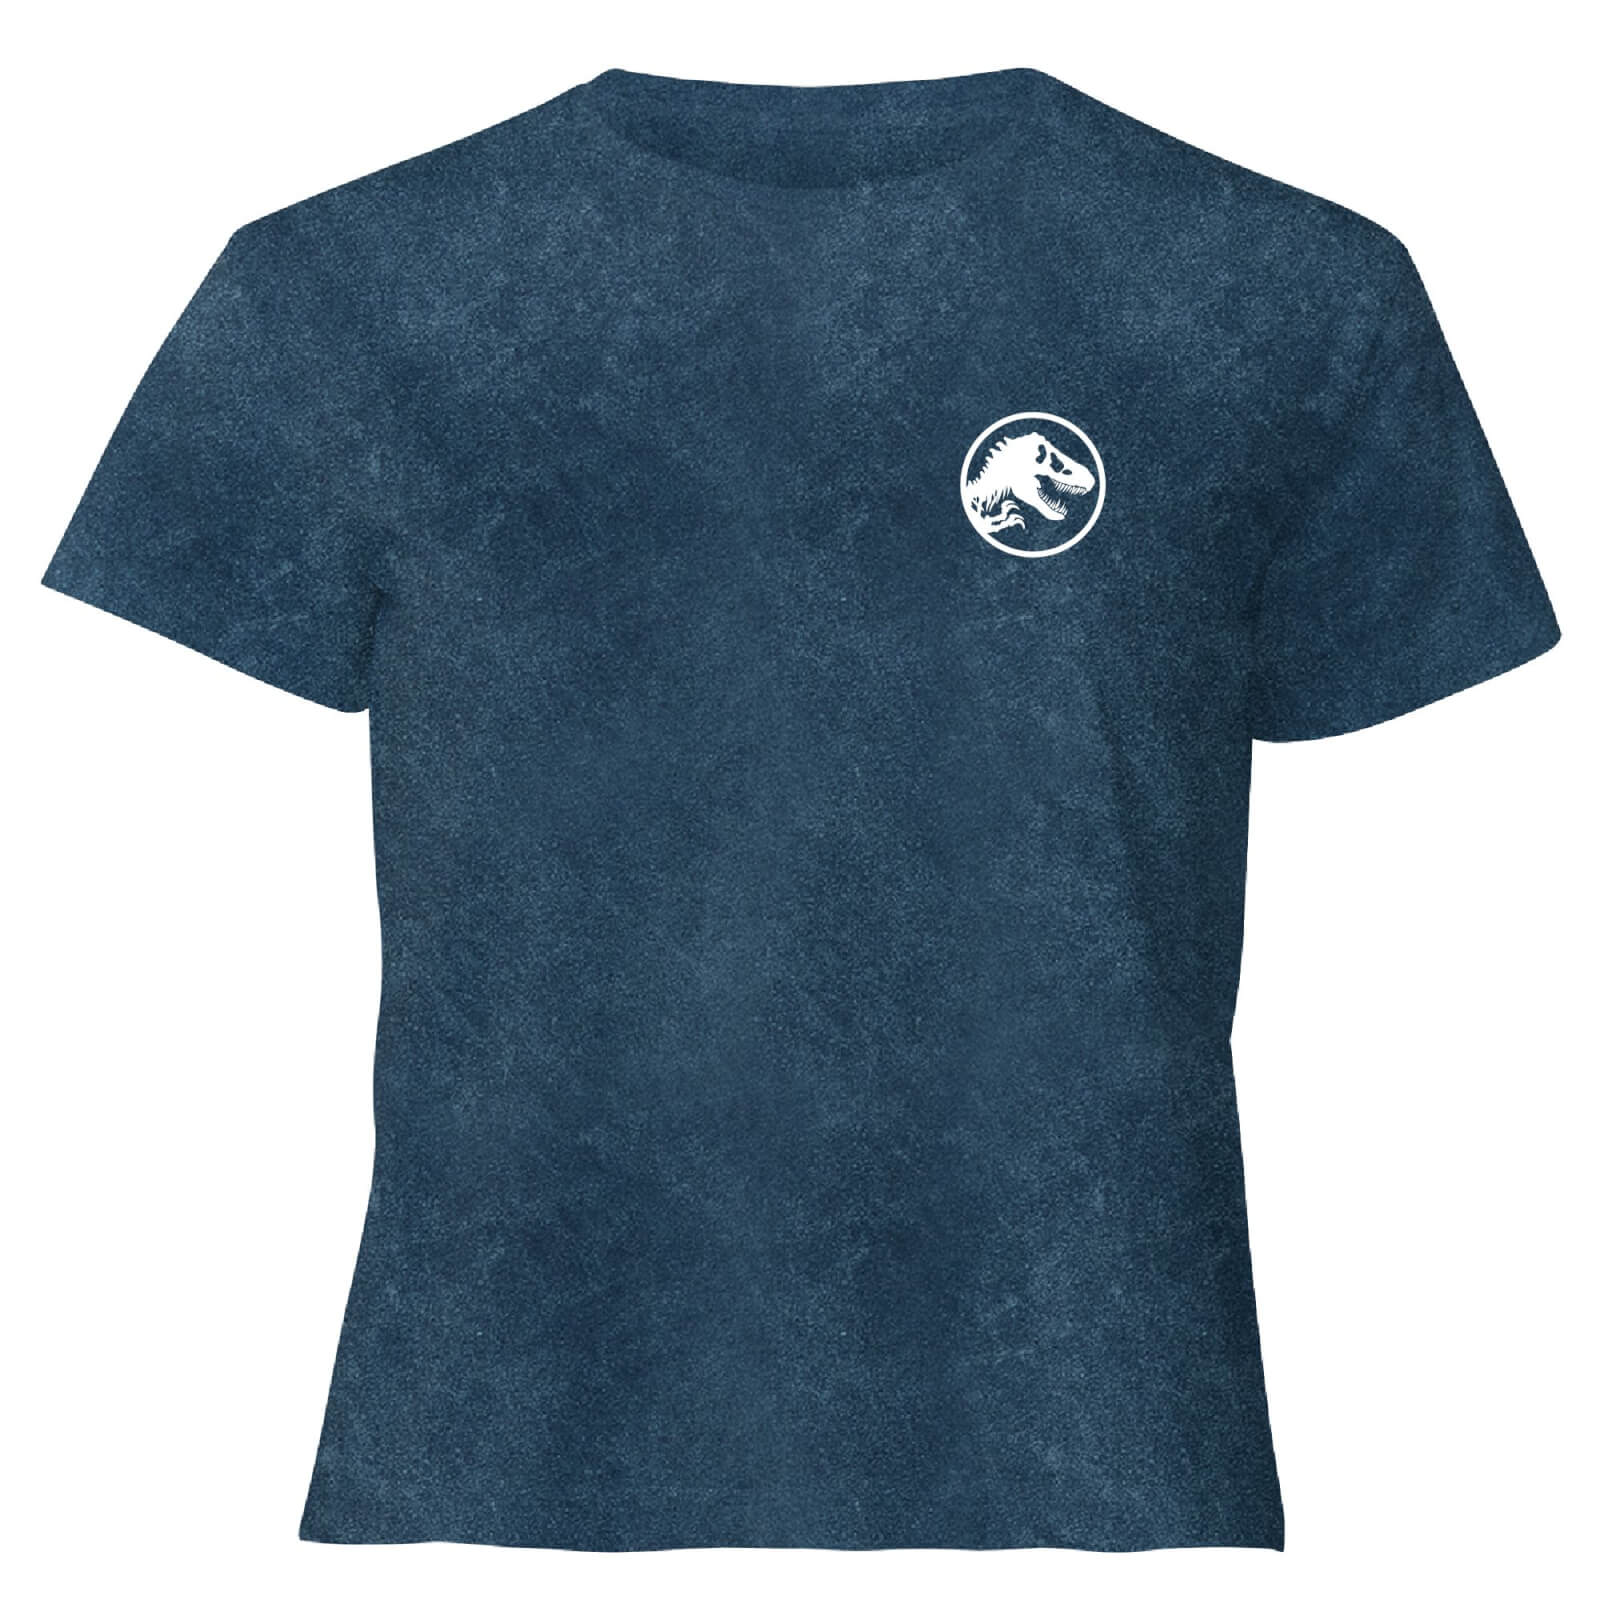 Jurassic Park Primal Limited Variant Ranger Logo - Women's Cropped T-Shirt - Navy Acid Wash - XS